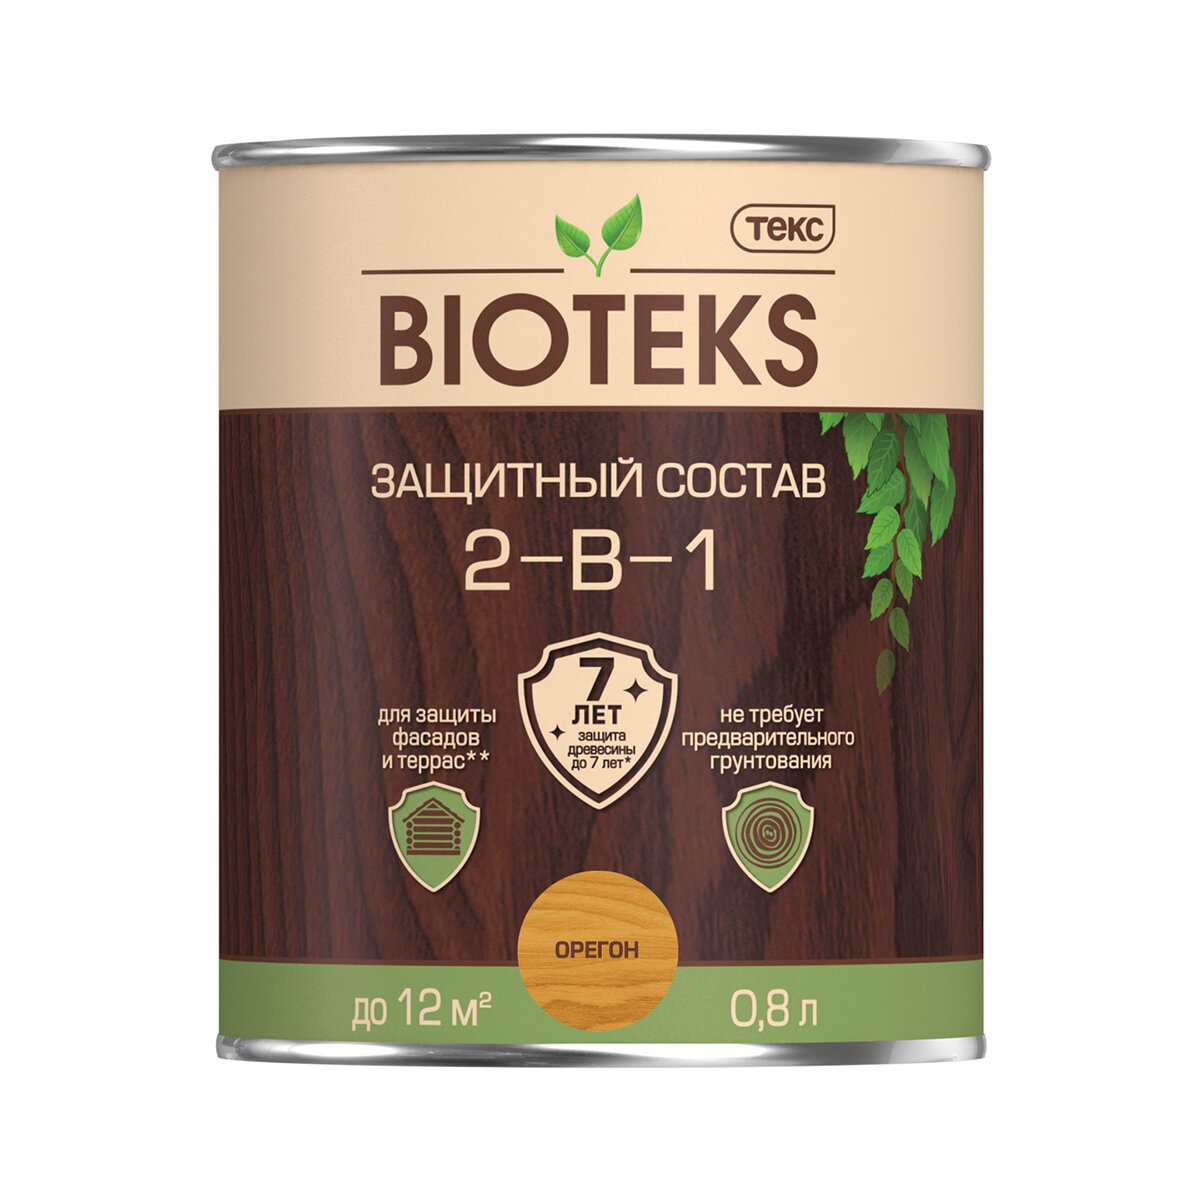      Bioteks 2--1, 0,8 , 